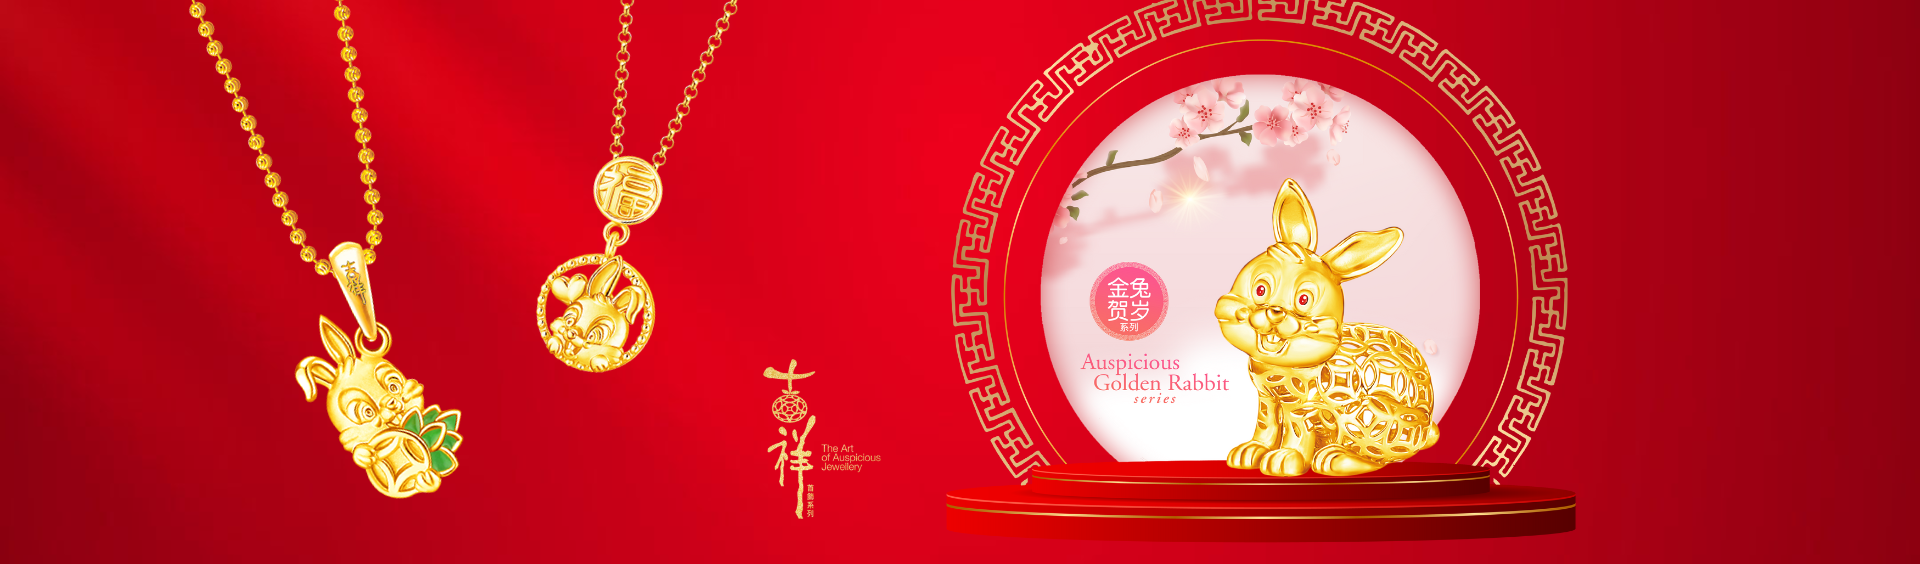 CNY Jewellery Website Banner